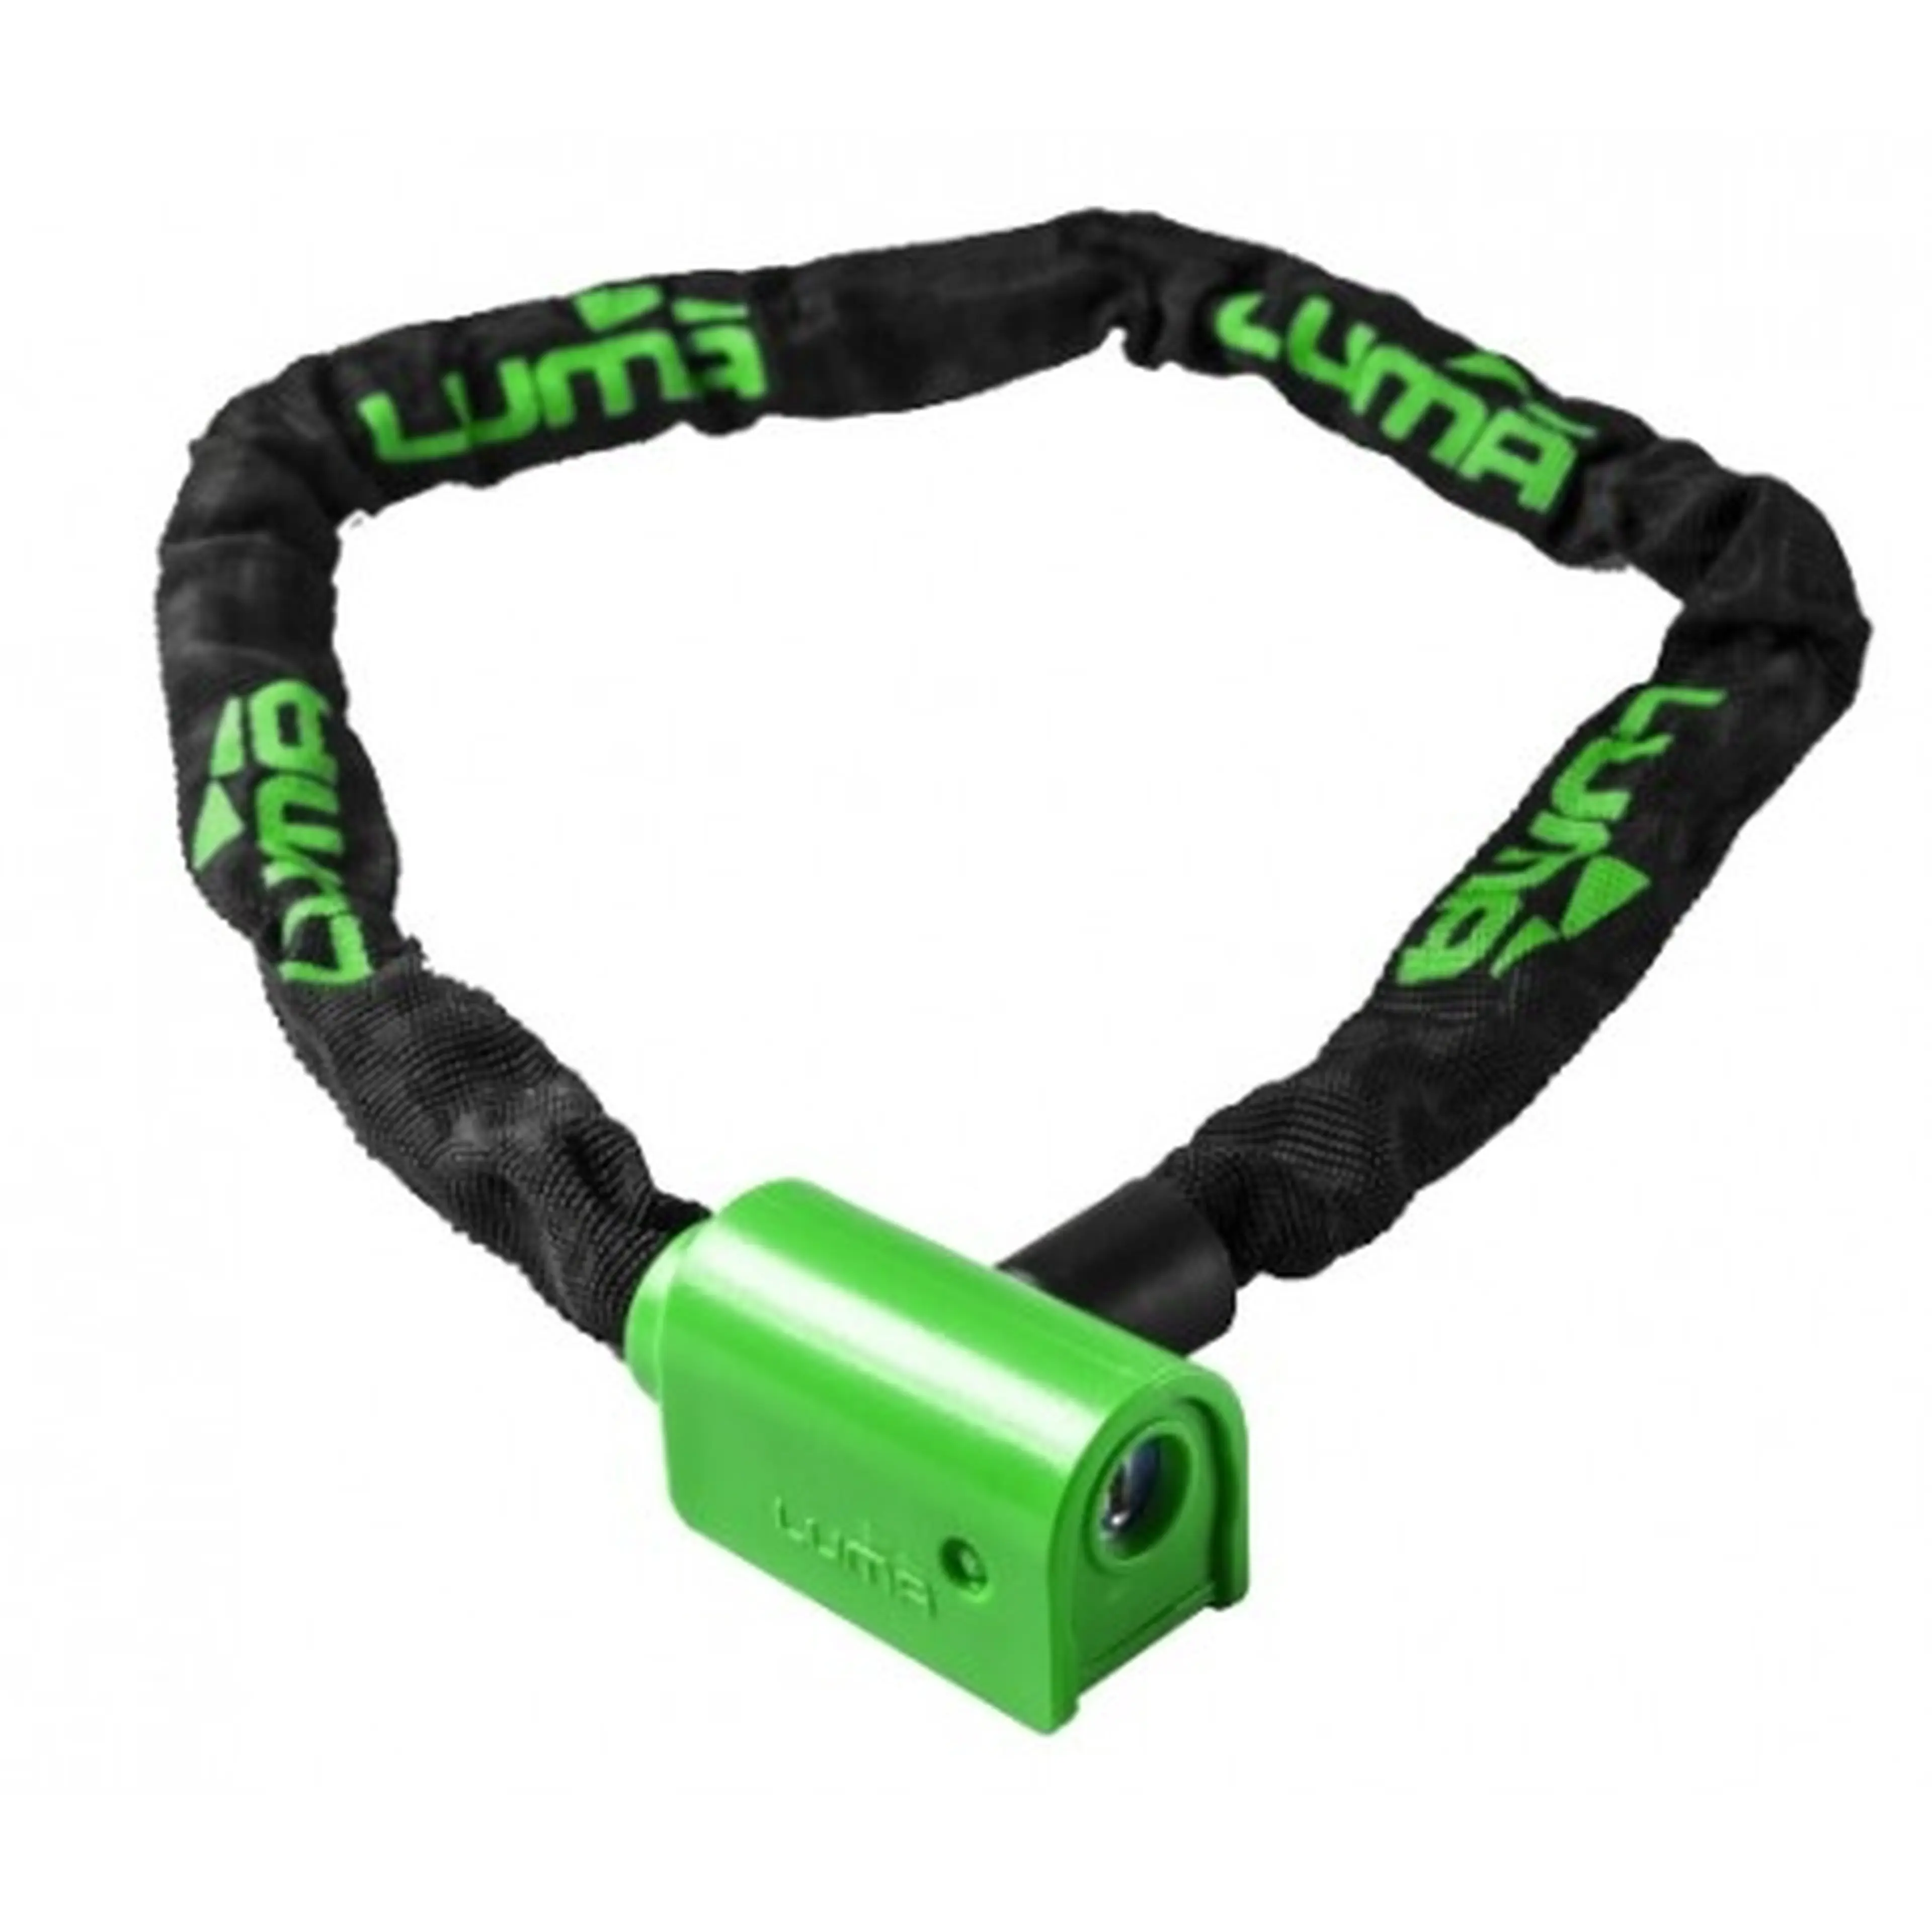 1. Lacat Luma Enduro 5 Chain 100 cm -  lum-kdb05100g